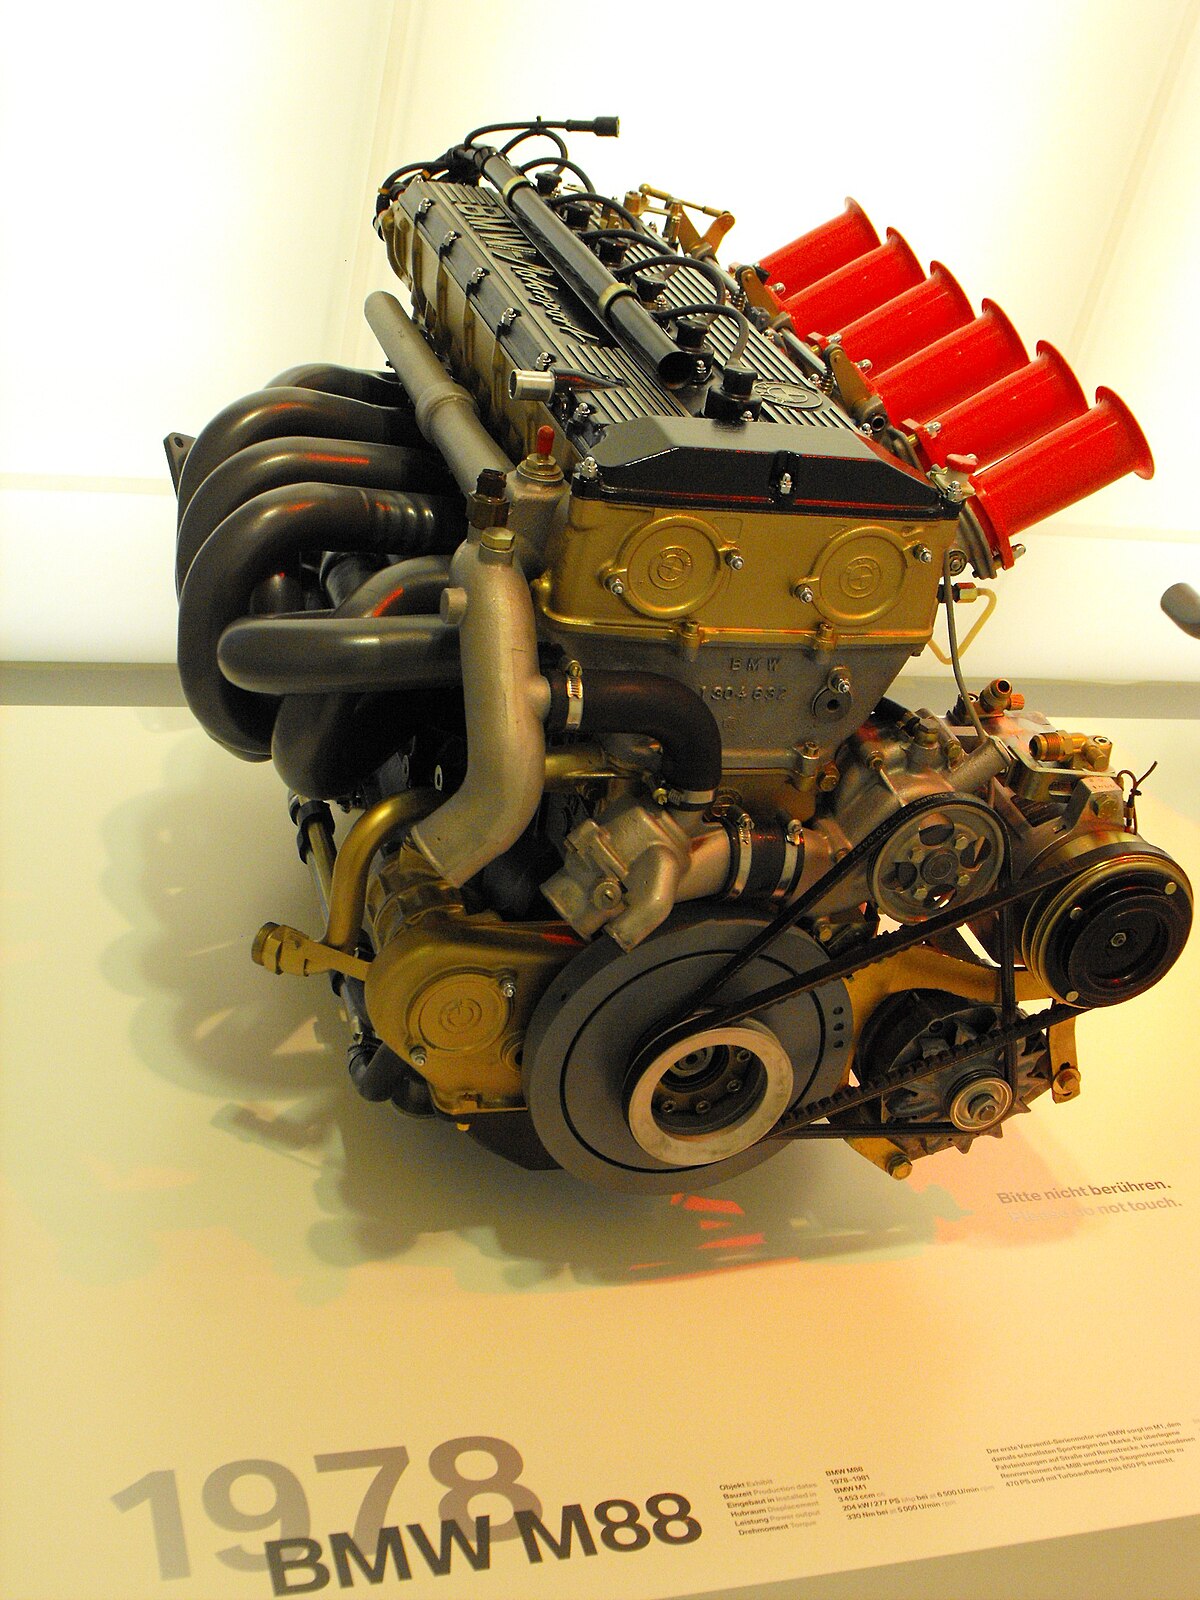 BMW P48 Turbo engine.